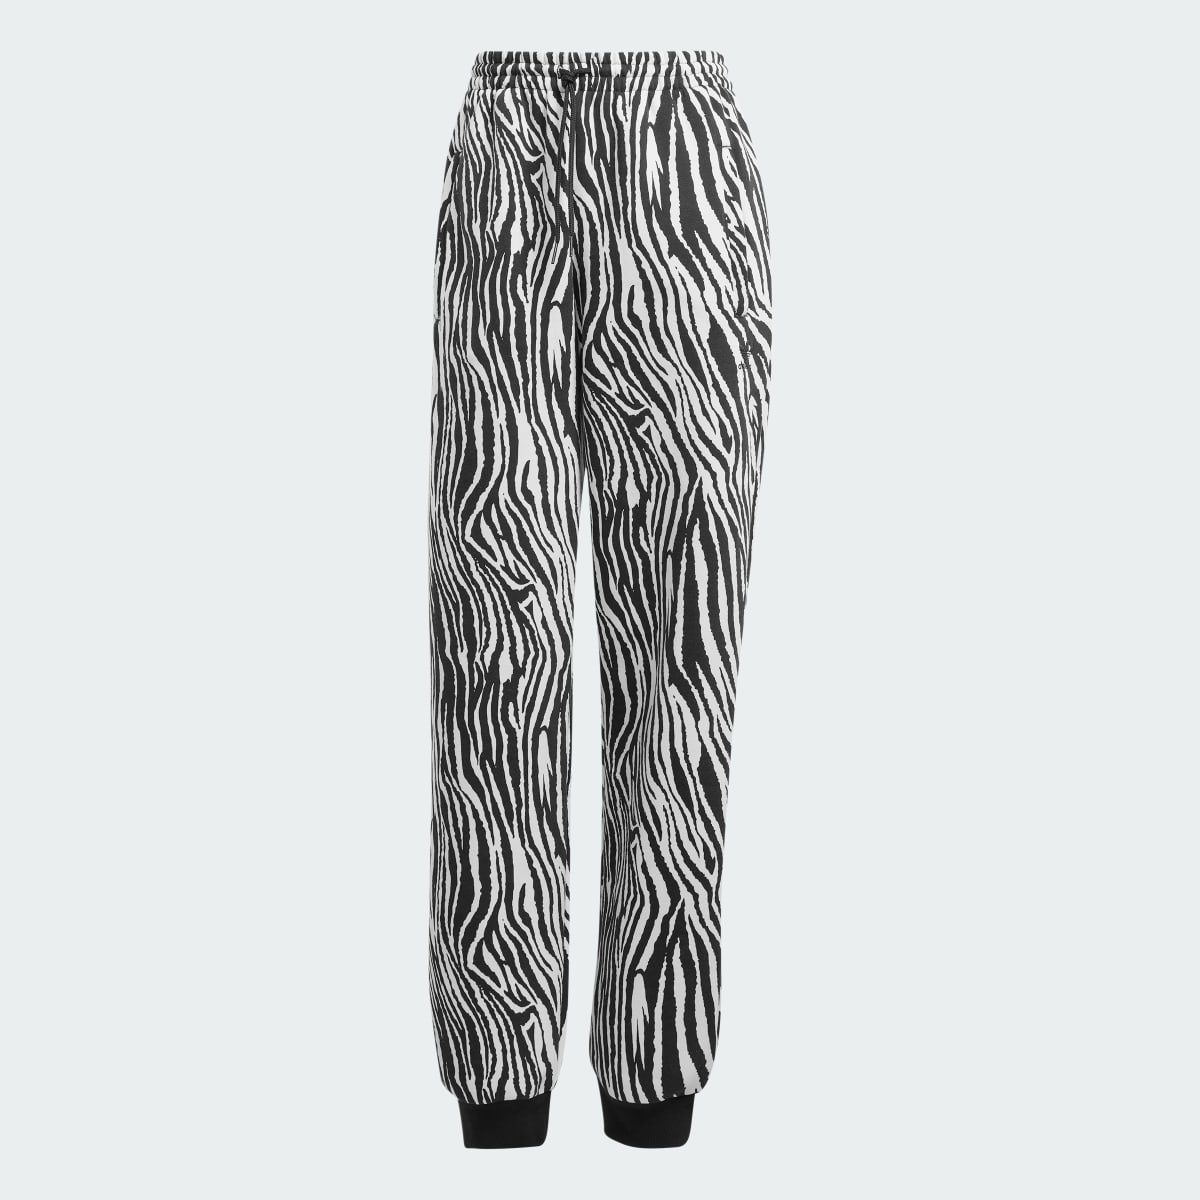 Adidas Spodnie dresowe Allover Zebra Animal Print Essentials. 4